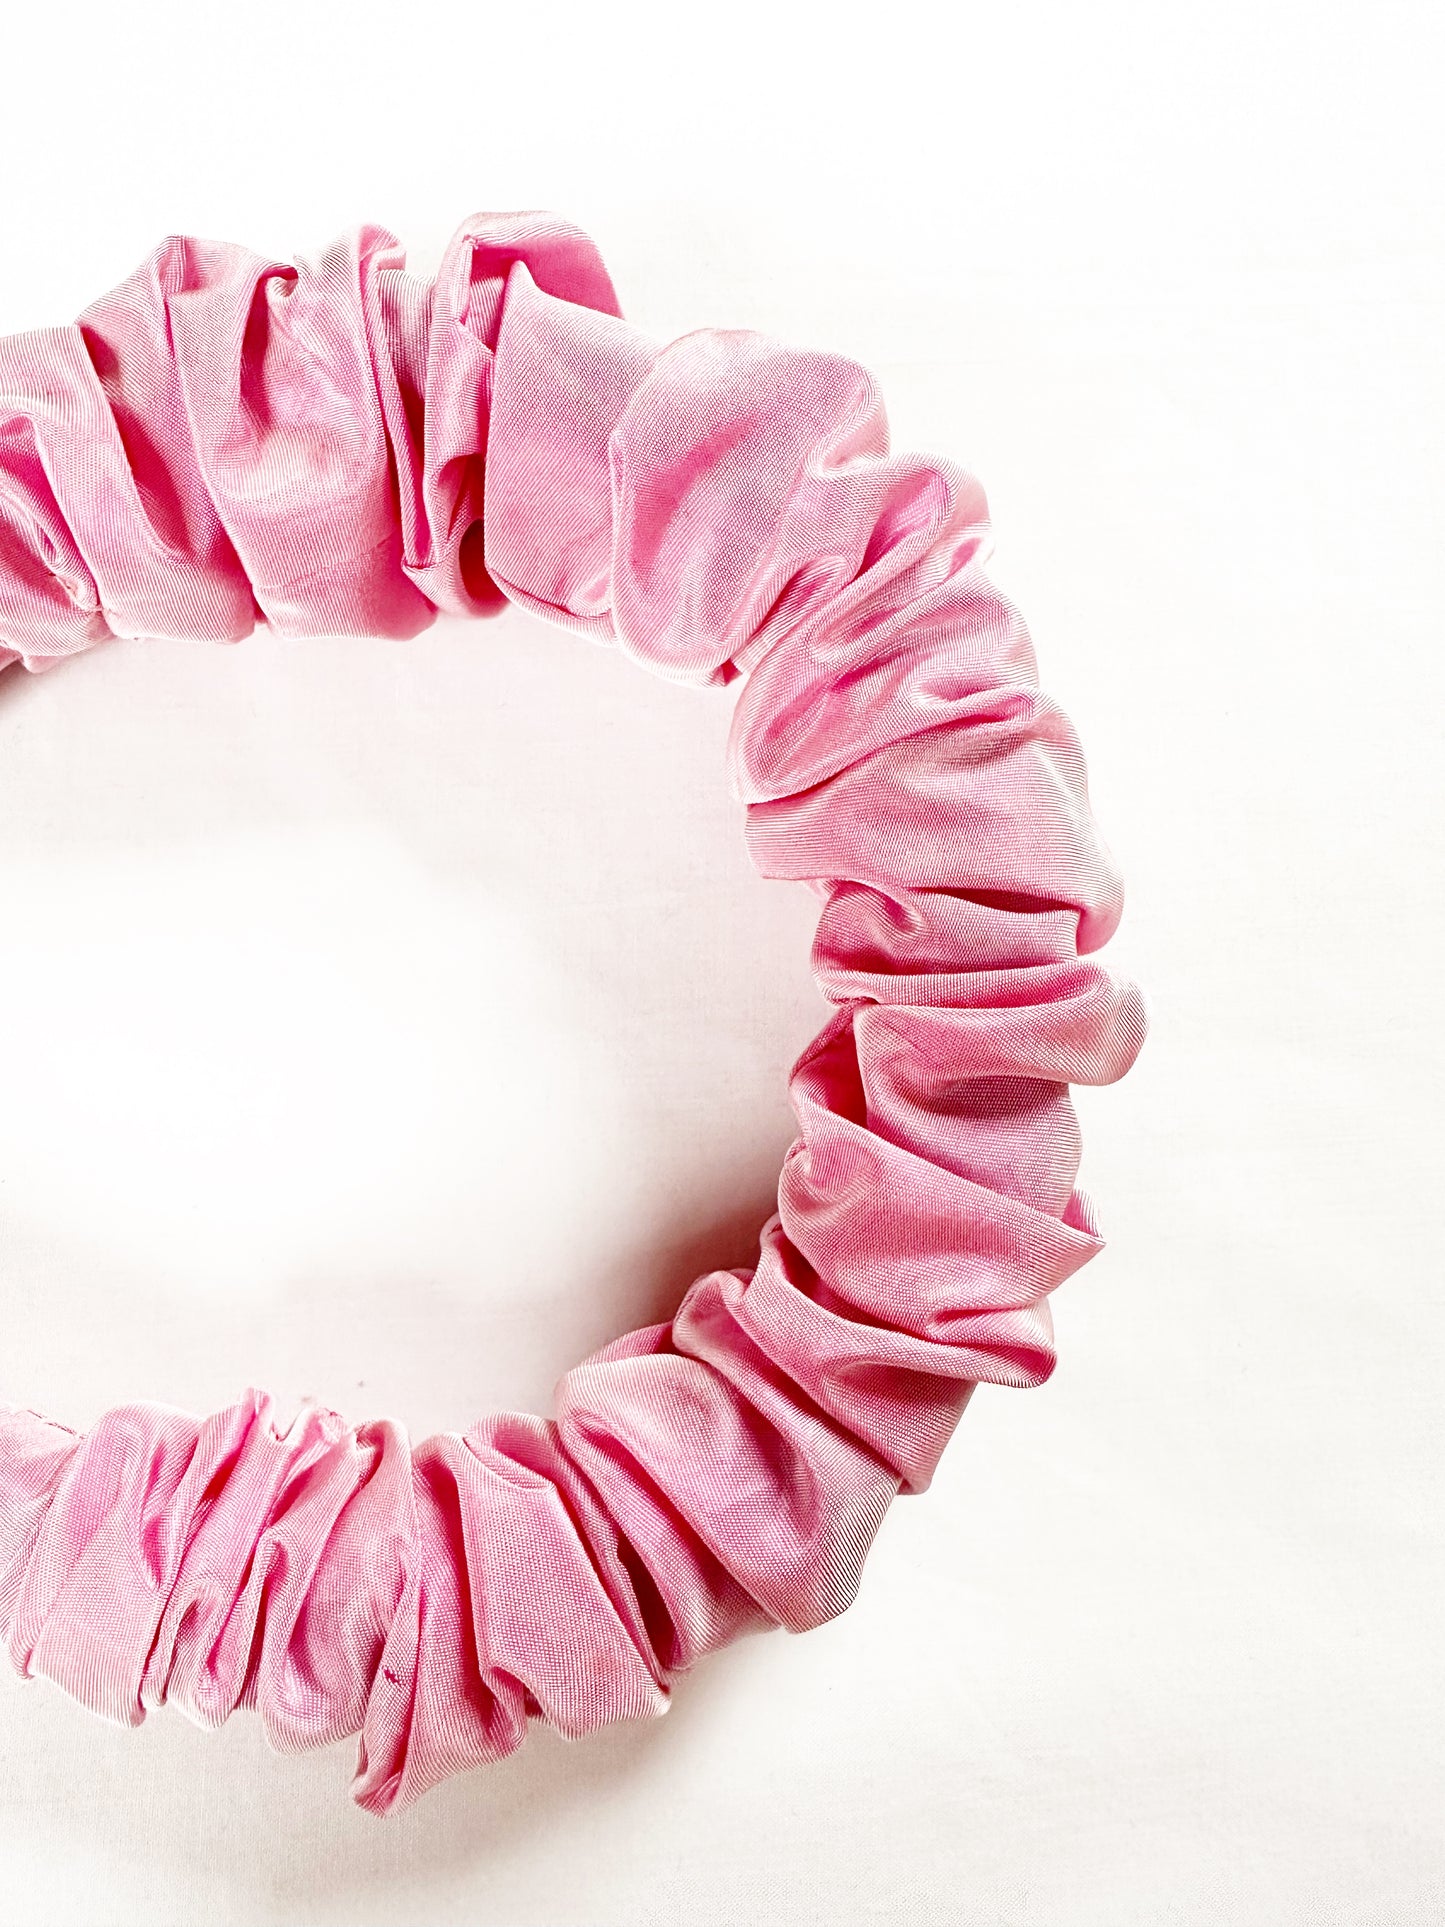 Ruffle Headband in pink taffeta